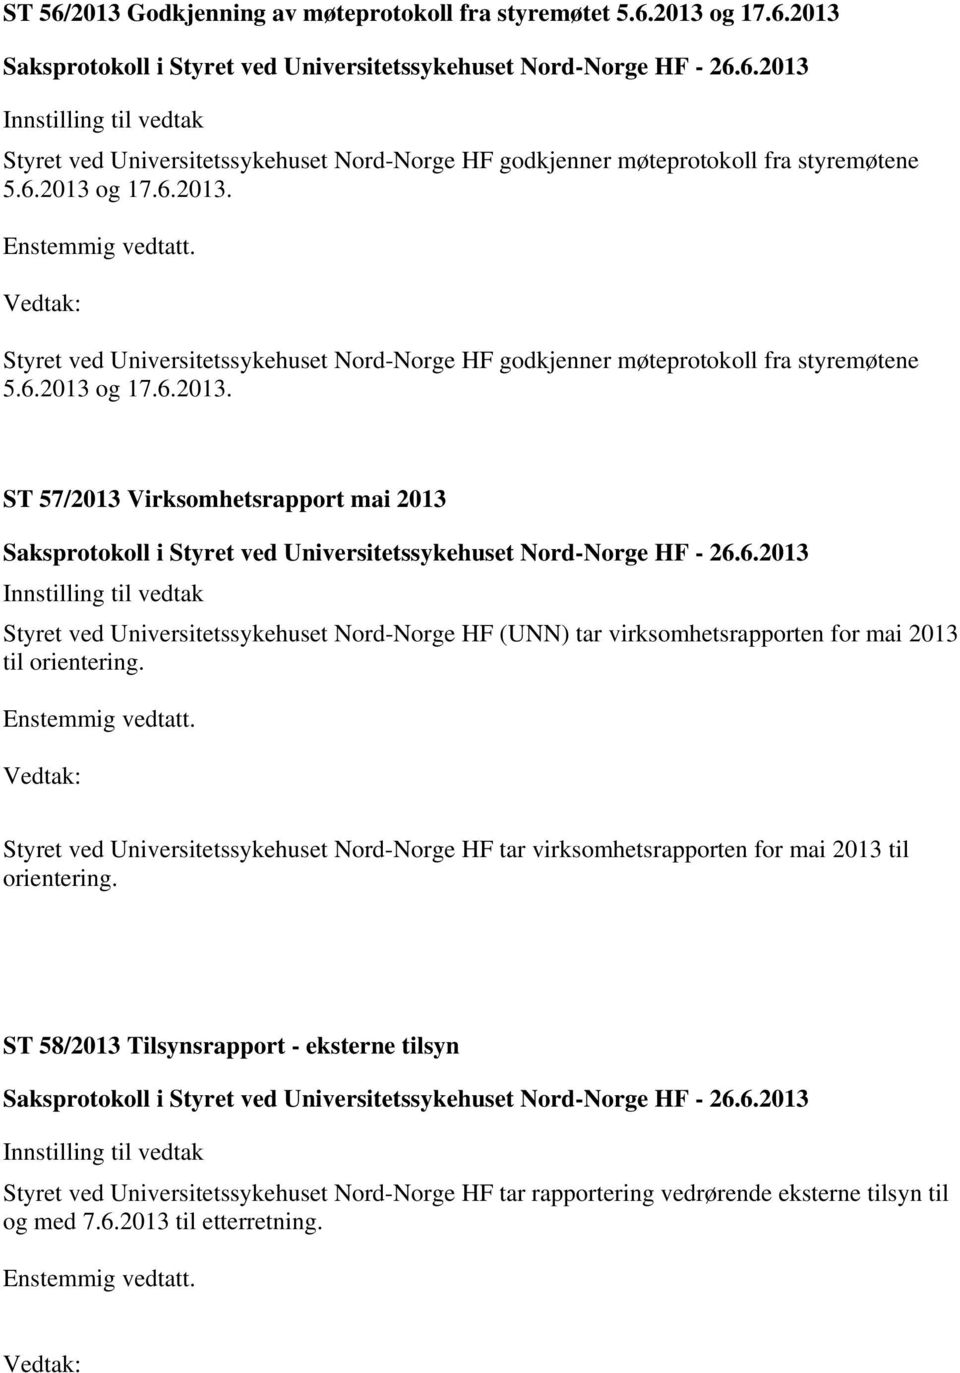 ST 58/2013 Tilsynsrapport - eksterne tilsyn Styret ved Universitetssykehuset Nord-Norge HF tar rapportering vedrørende eksterne tilsyn til og med 7.6.2013 til etterretning.